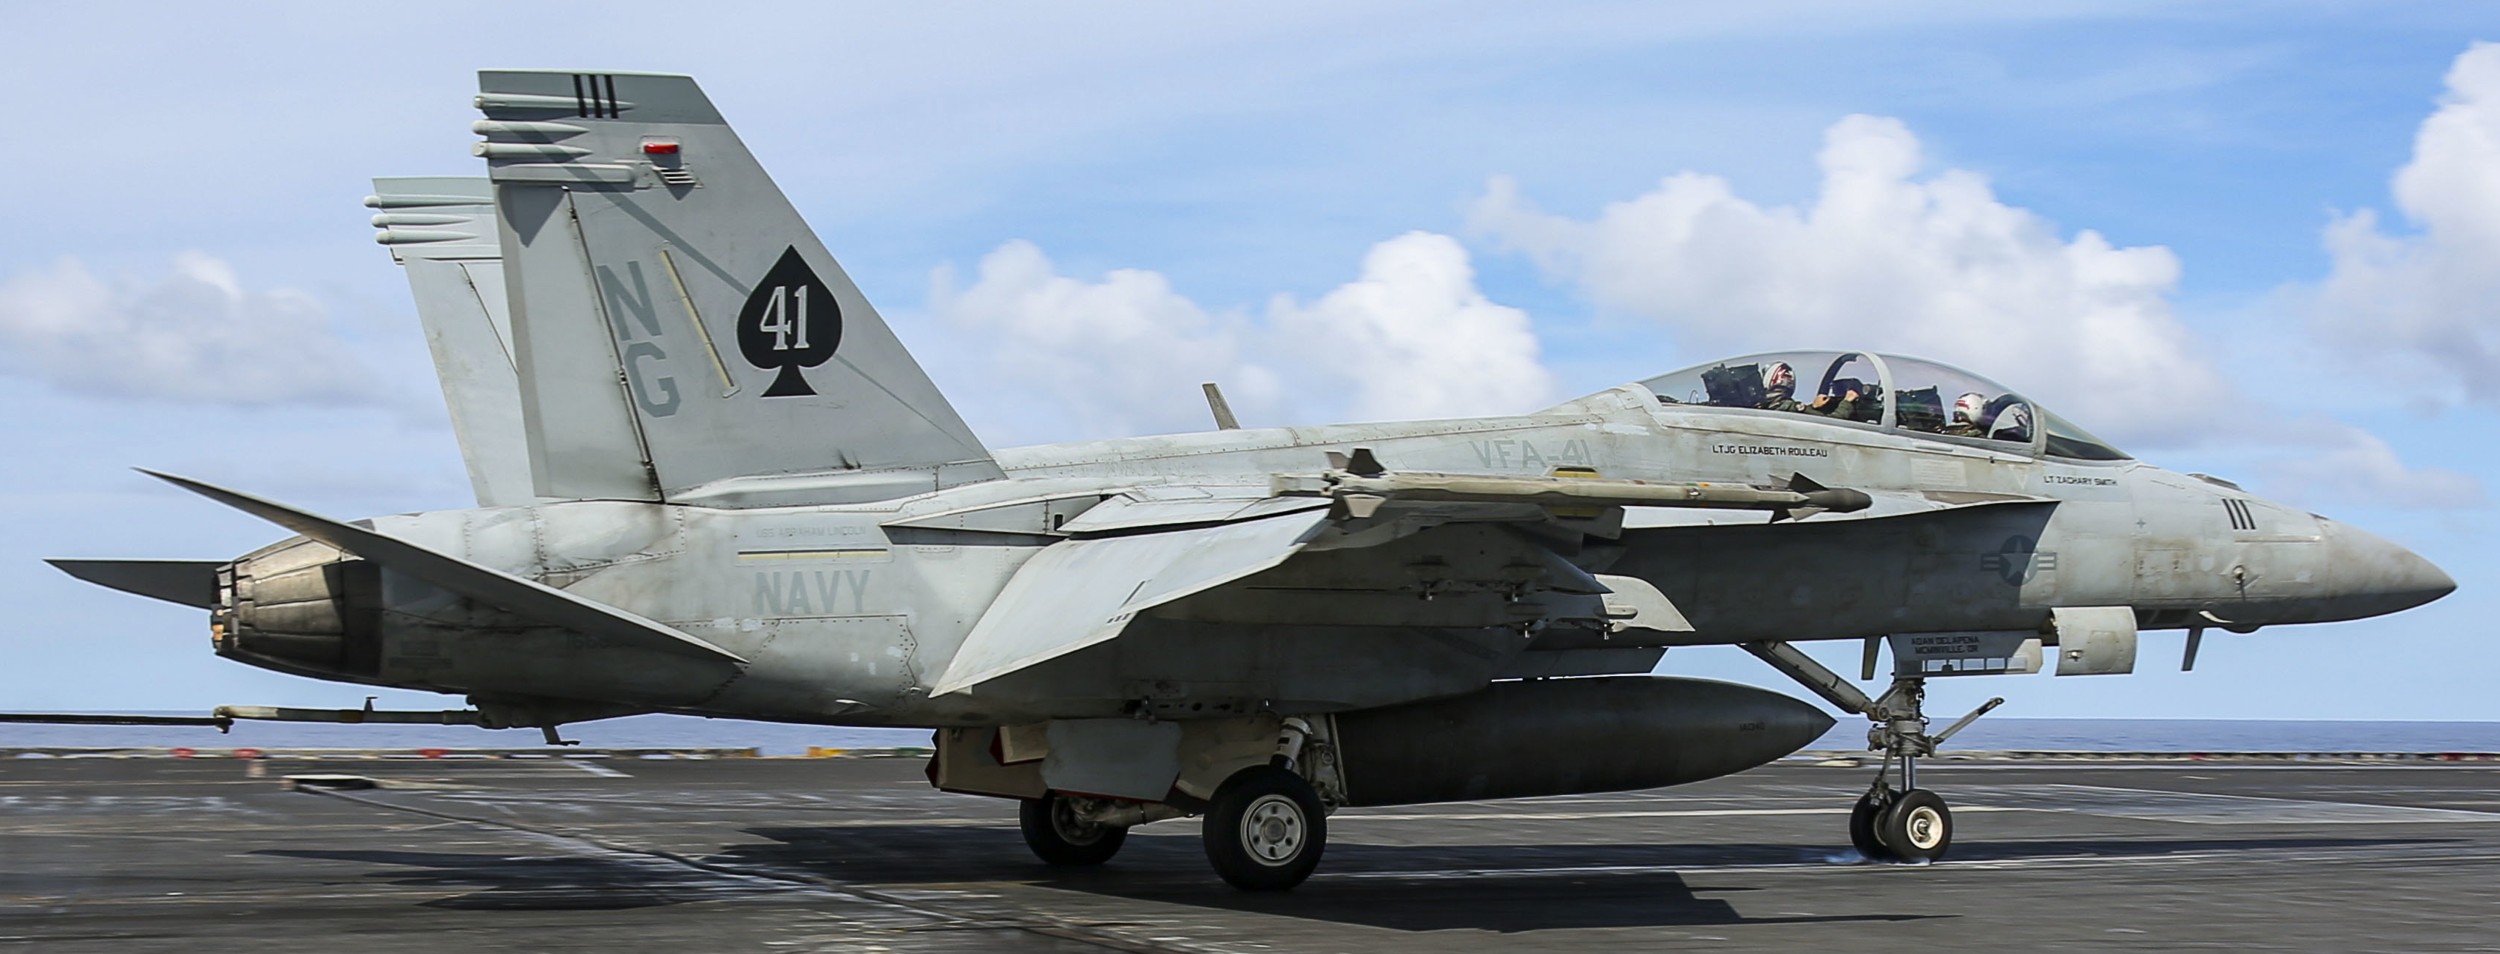 vfa-41 black aces strike fighter squadron f/a-18f super hornet cvw-9 cvn-72 uss abraham lincoln us navy 99